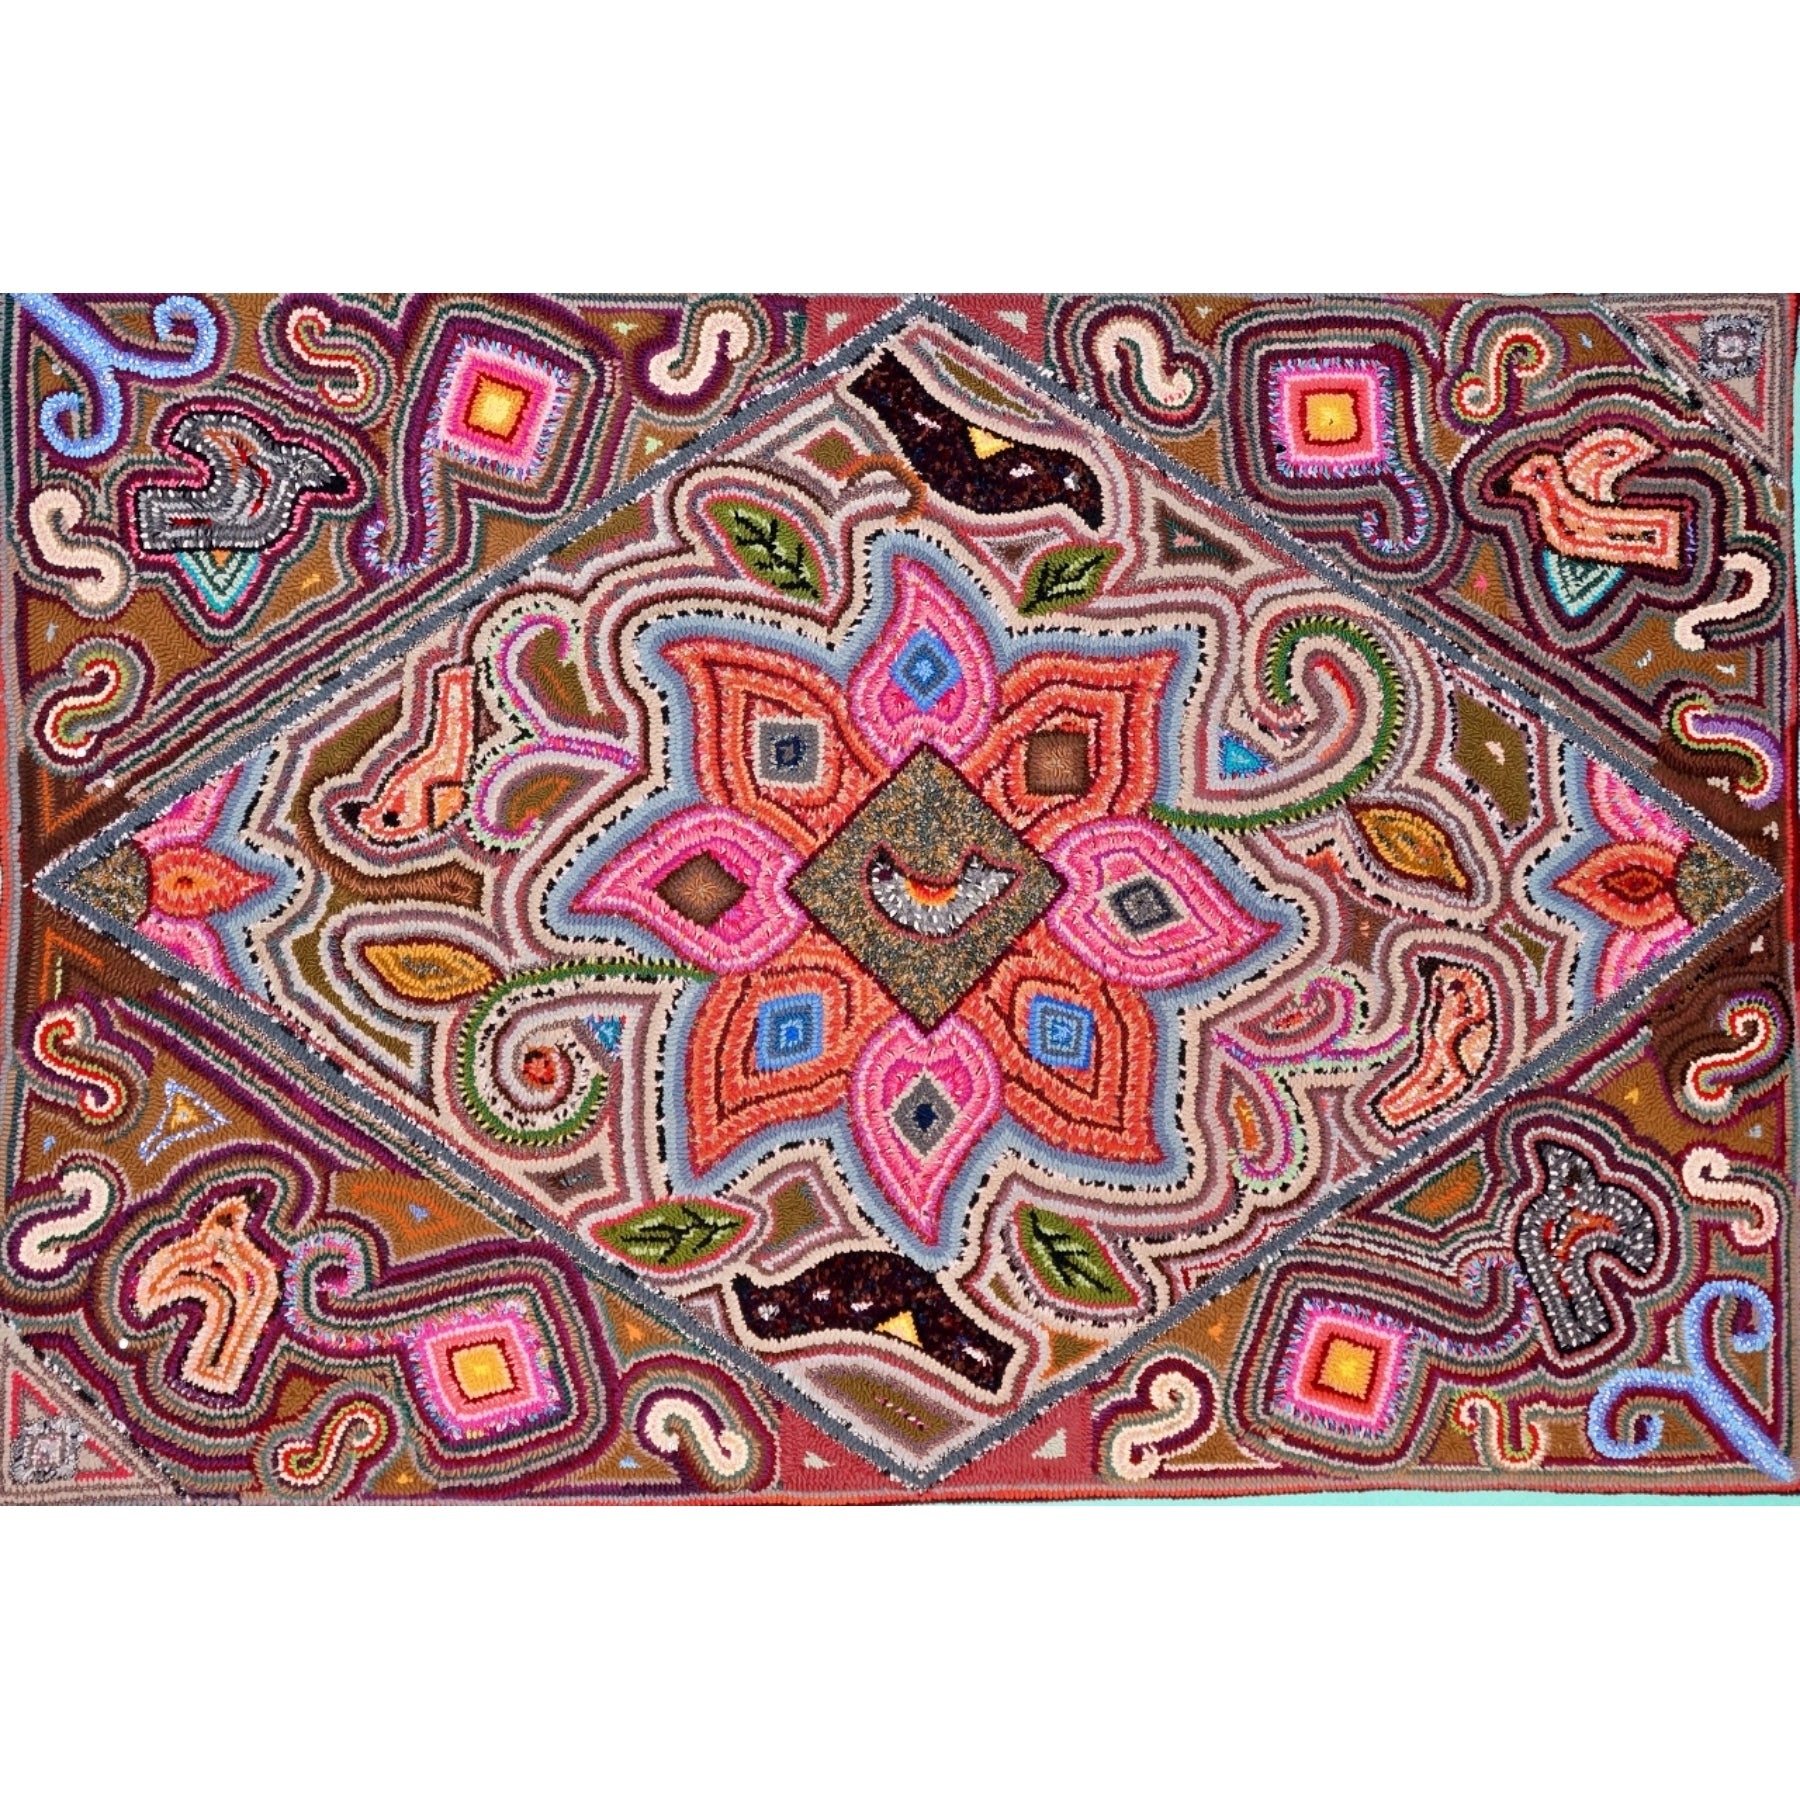 Multicolores Pattern #2, rug hooked by Ramona Cristina Tumax Tzunun